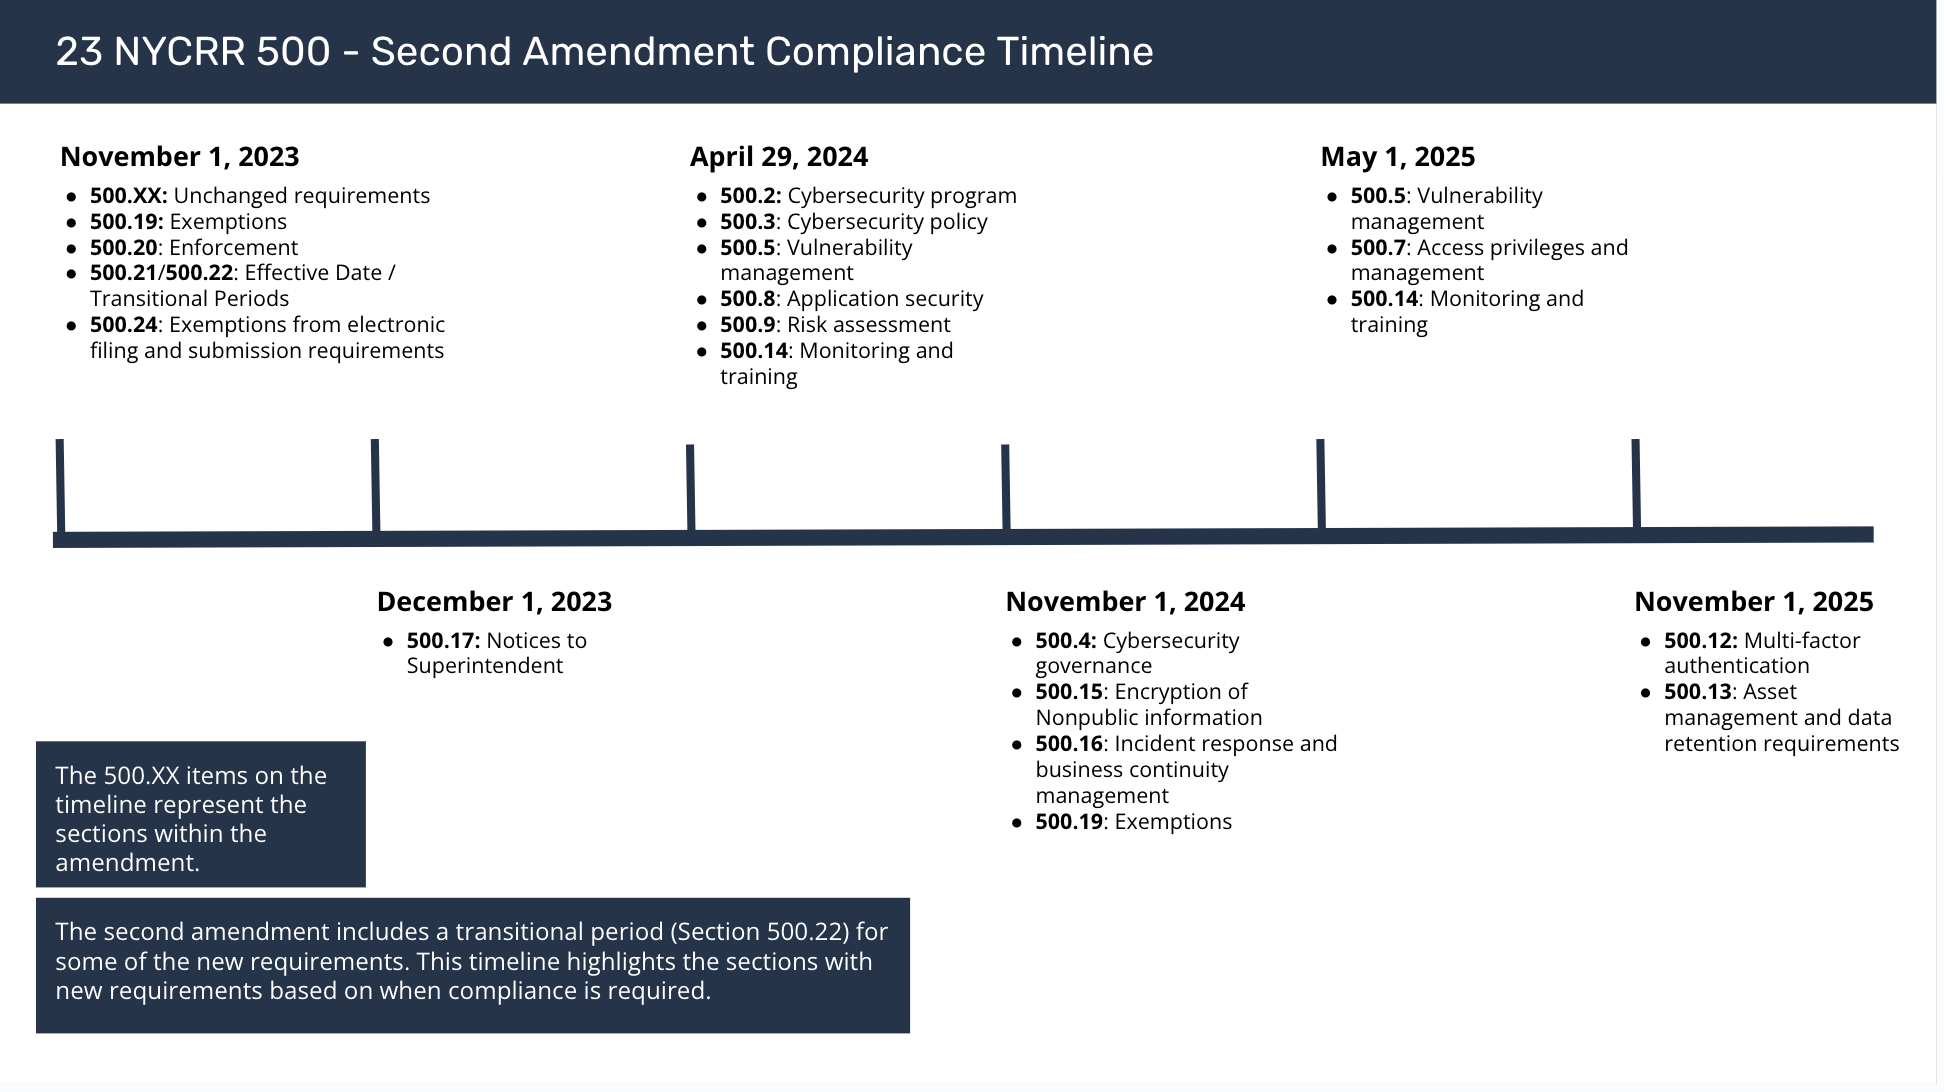 [TIMELINE] 23 NYCRR 500 - Second Amendment Compliance Timeline